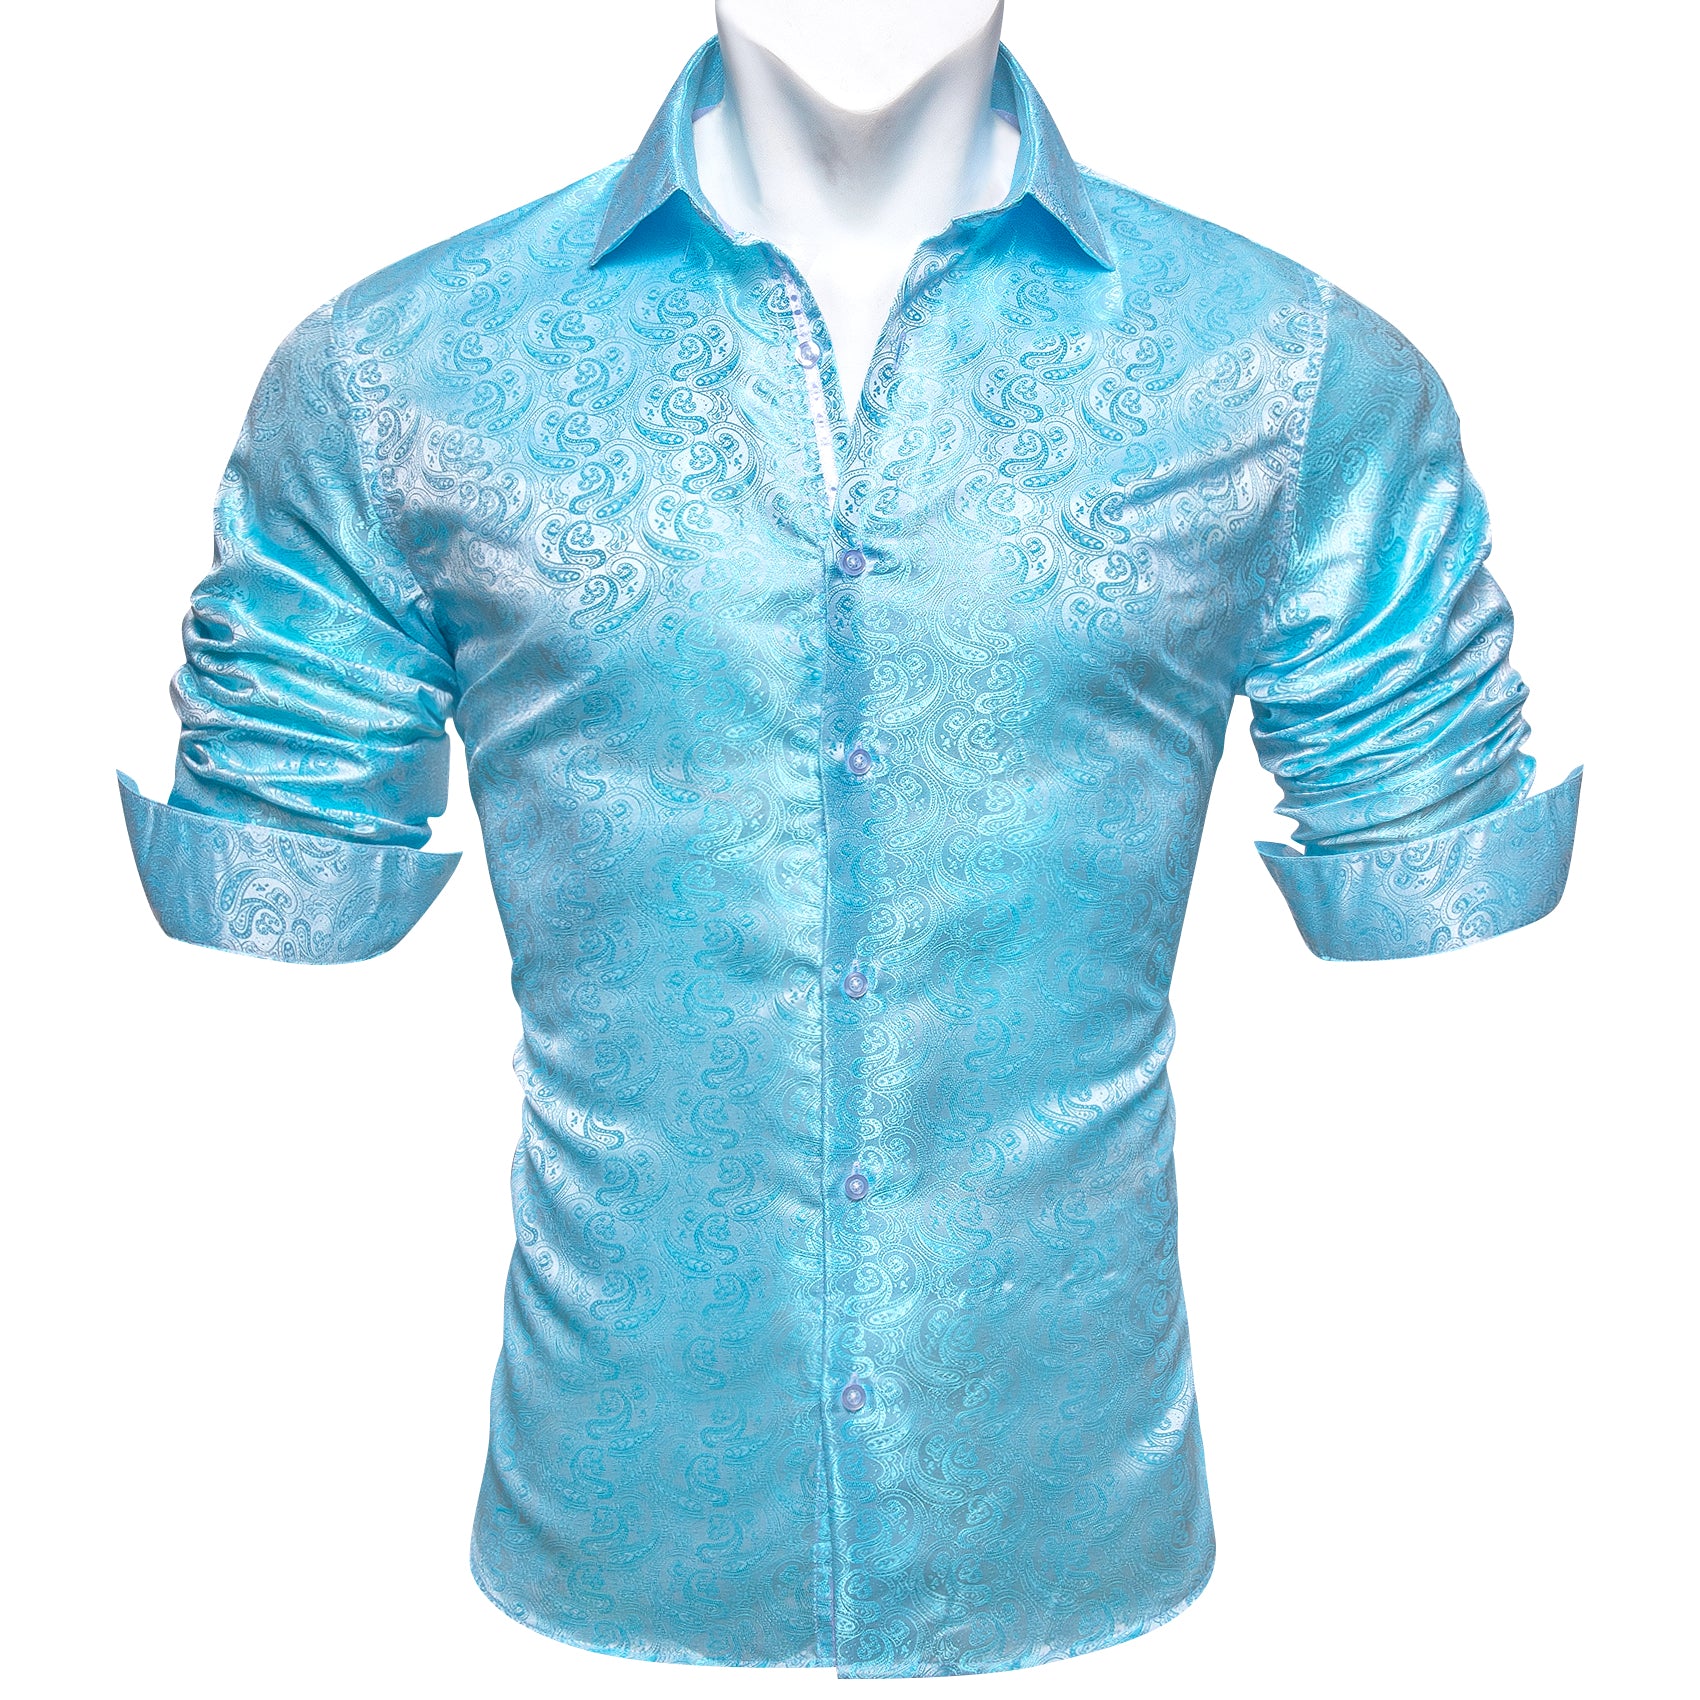 Barry.wang Teal Blue Paisley Silk Shirt